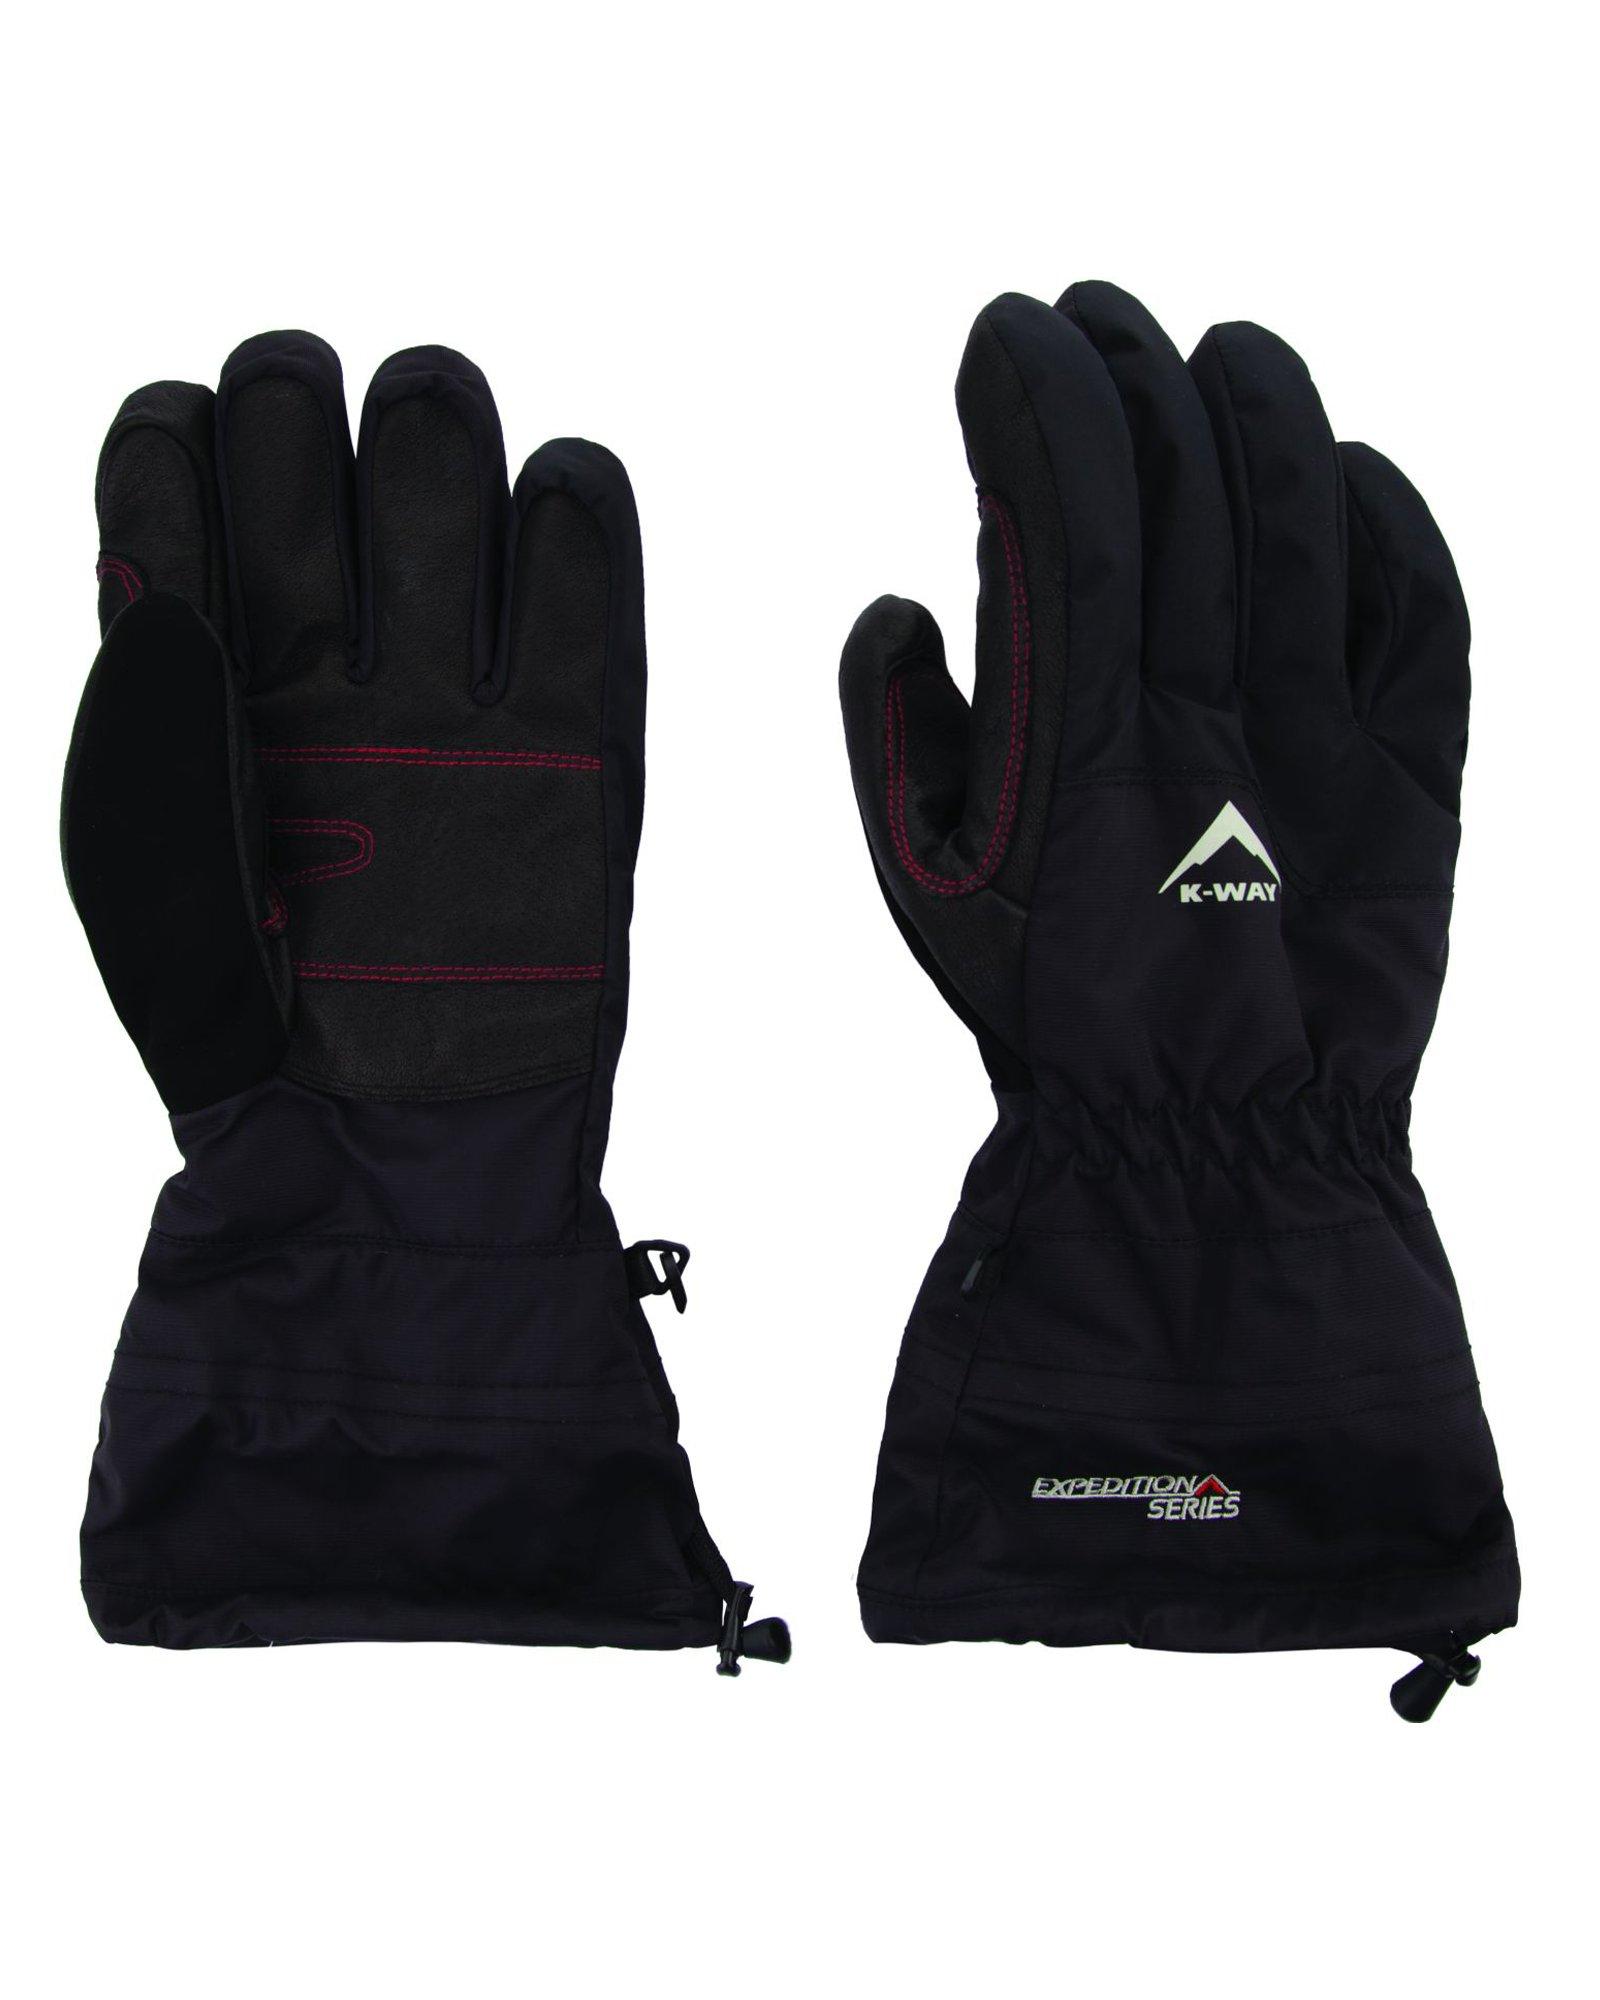 K-Way Expedition Series Ultar Sar Alpine Gloves -  Black